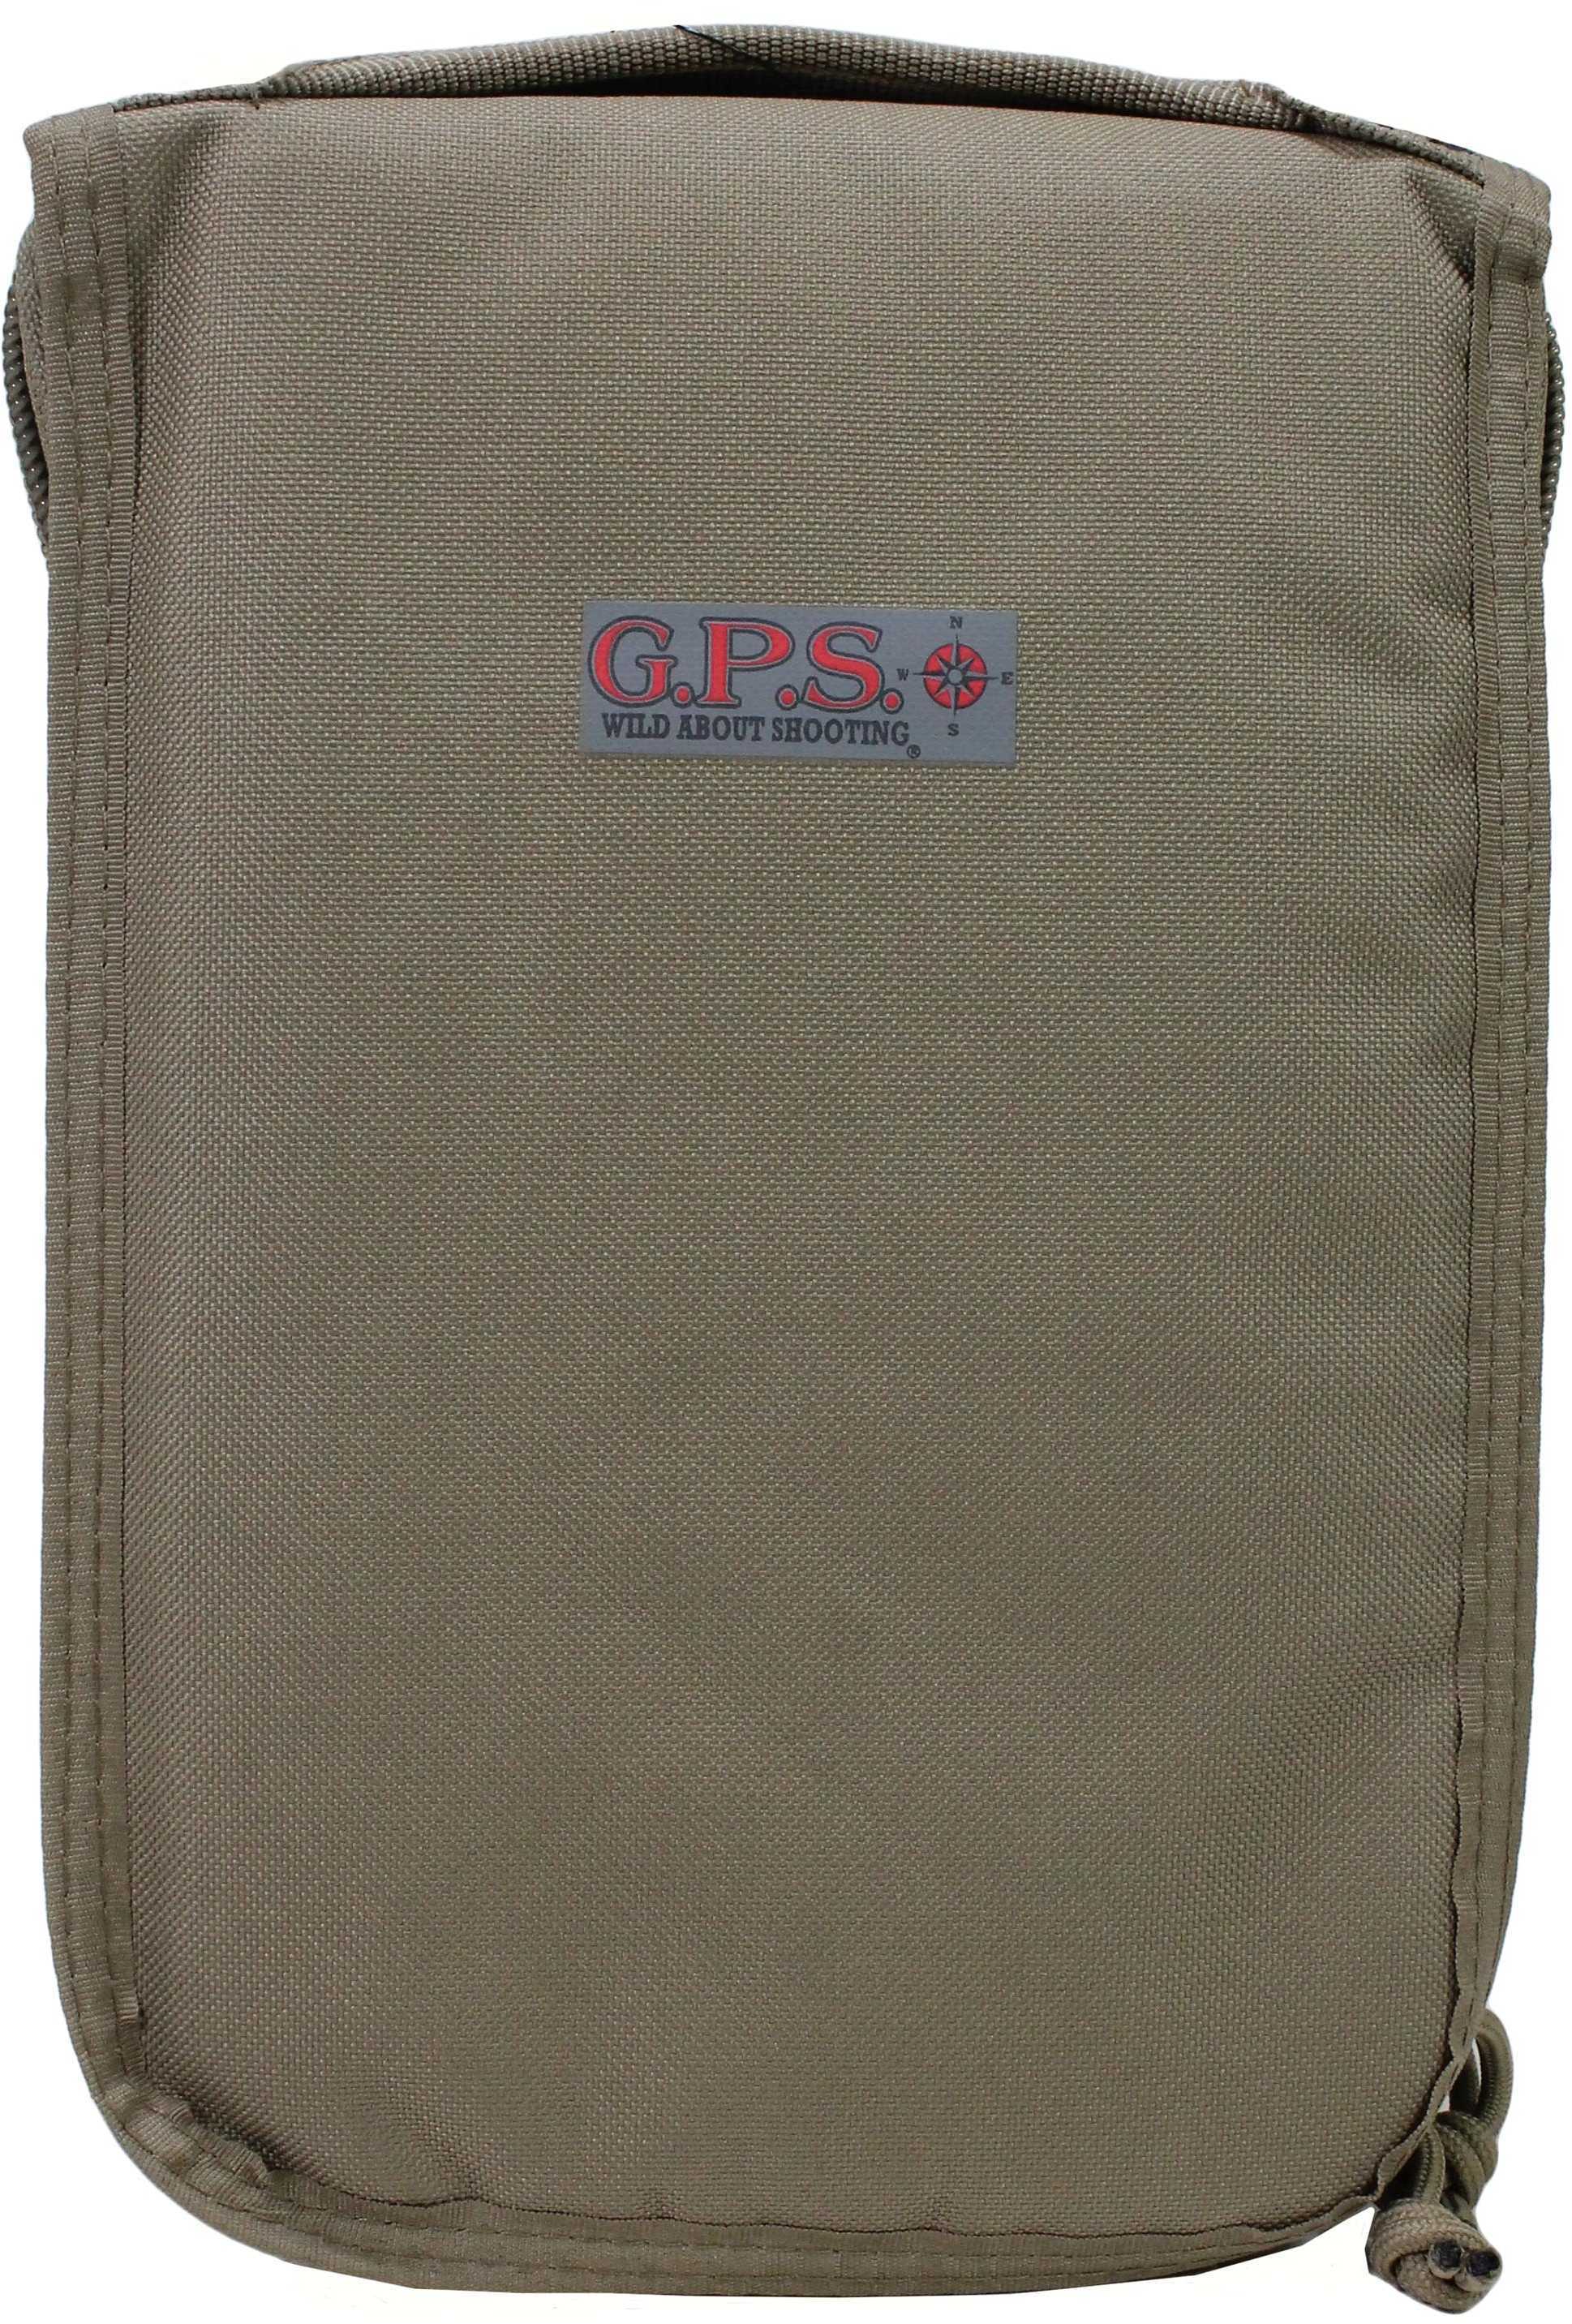 G-Outdoors, Inc. Pistol Case, Tan, Soft GPS-T1175P